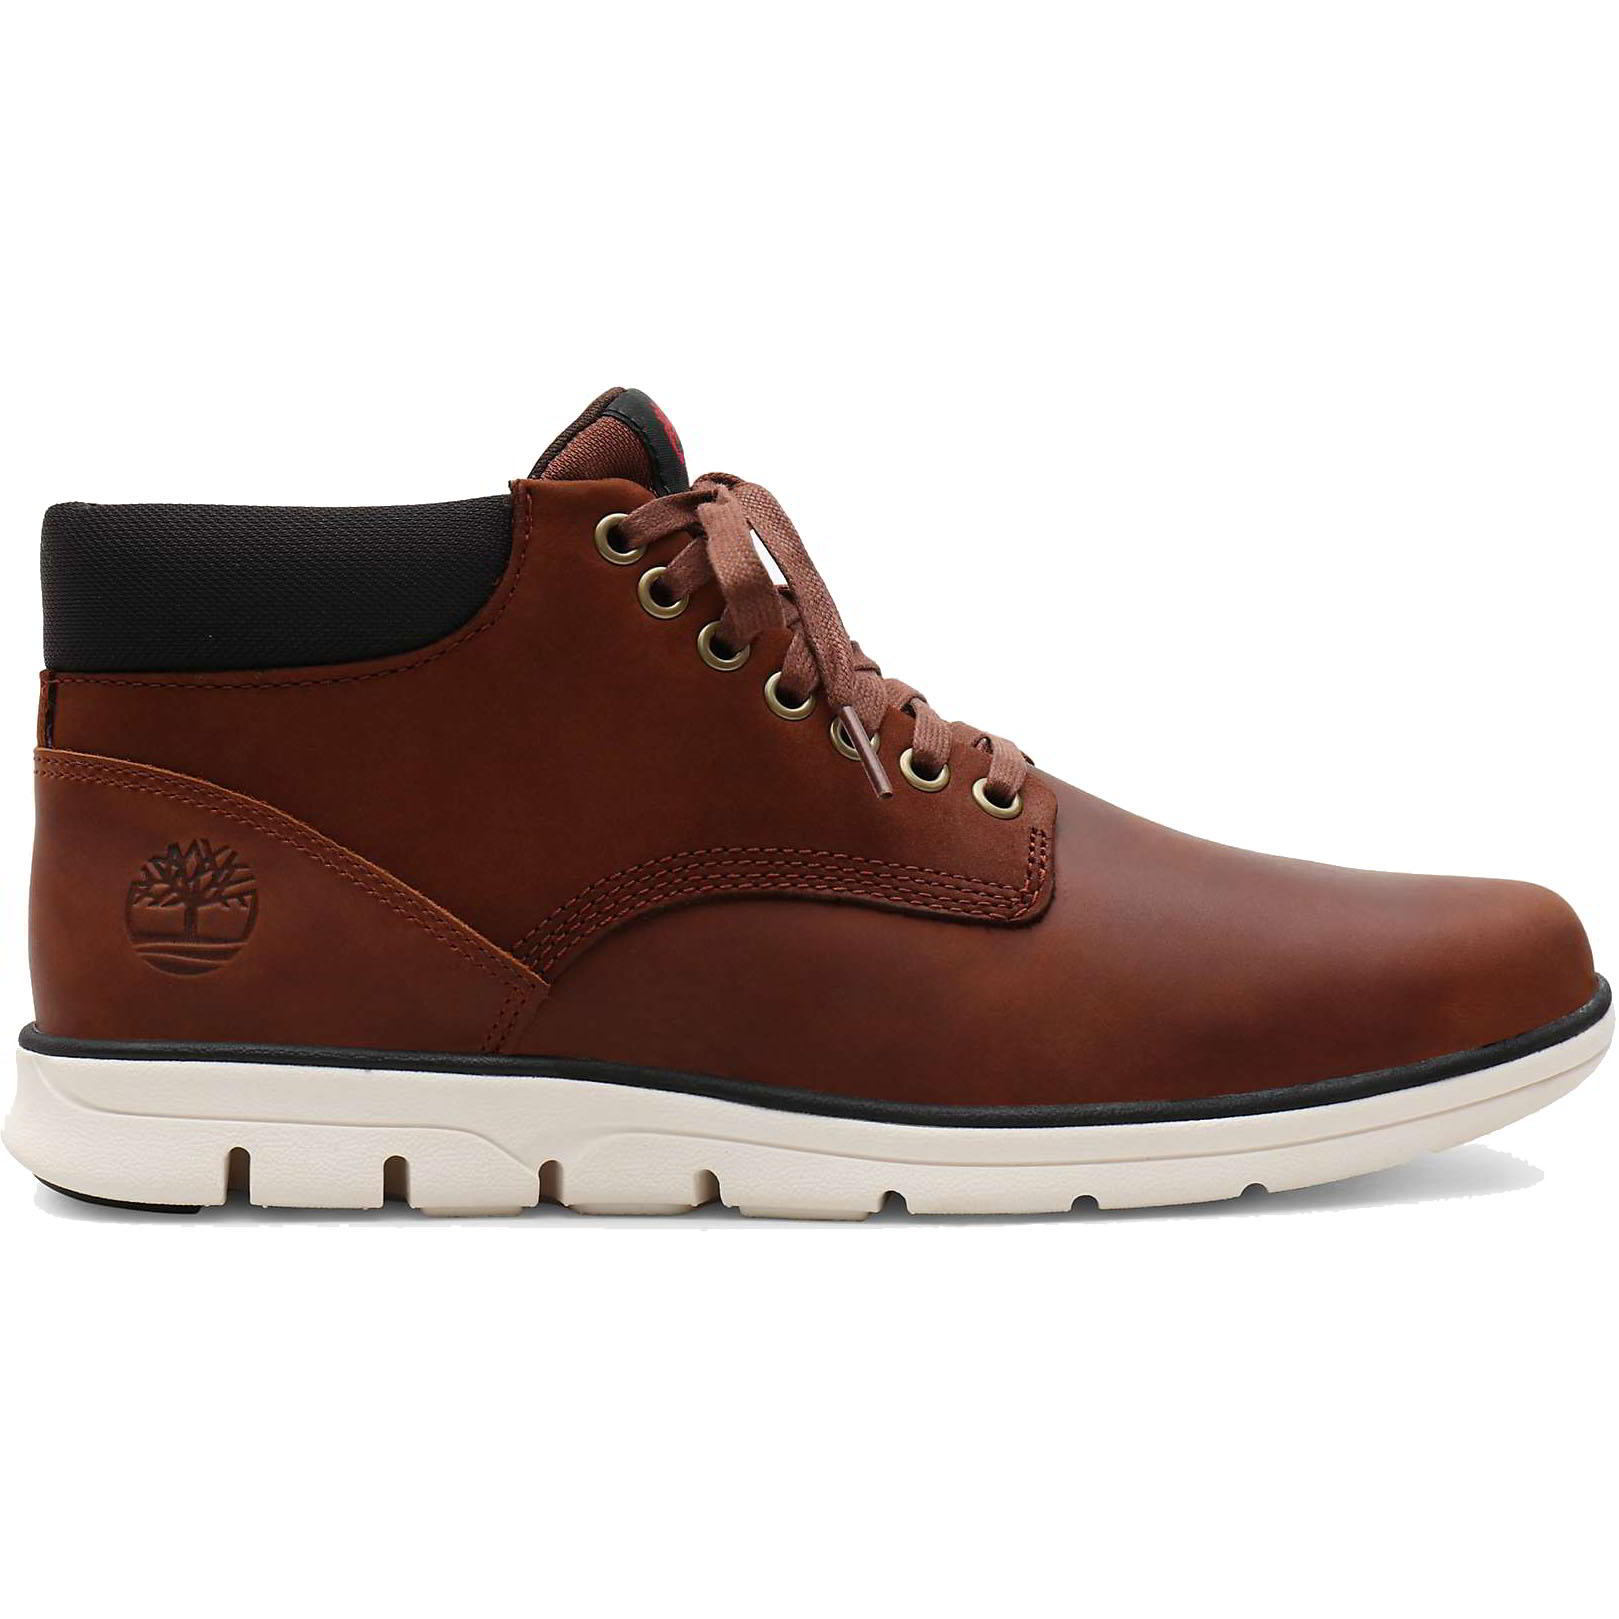 Timberland Men's Bradstreet Chukka Leather Ankle Boots - UK 9